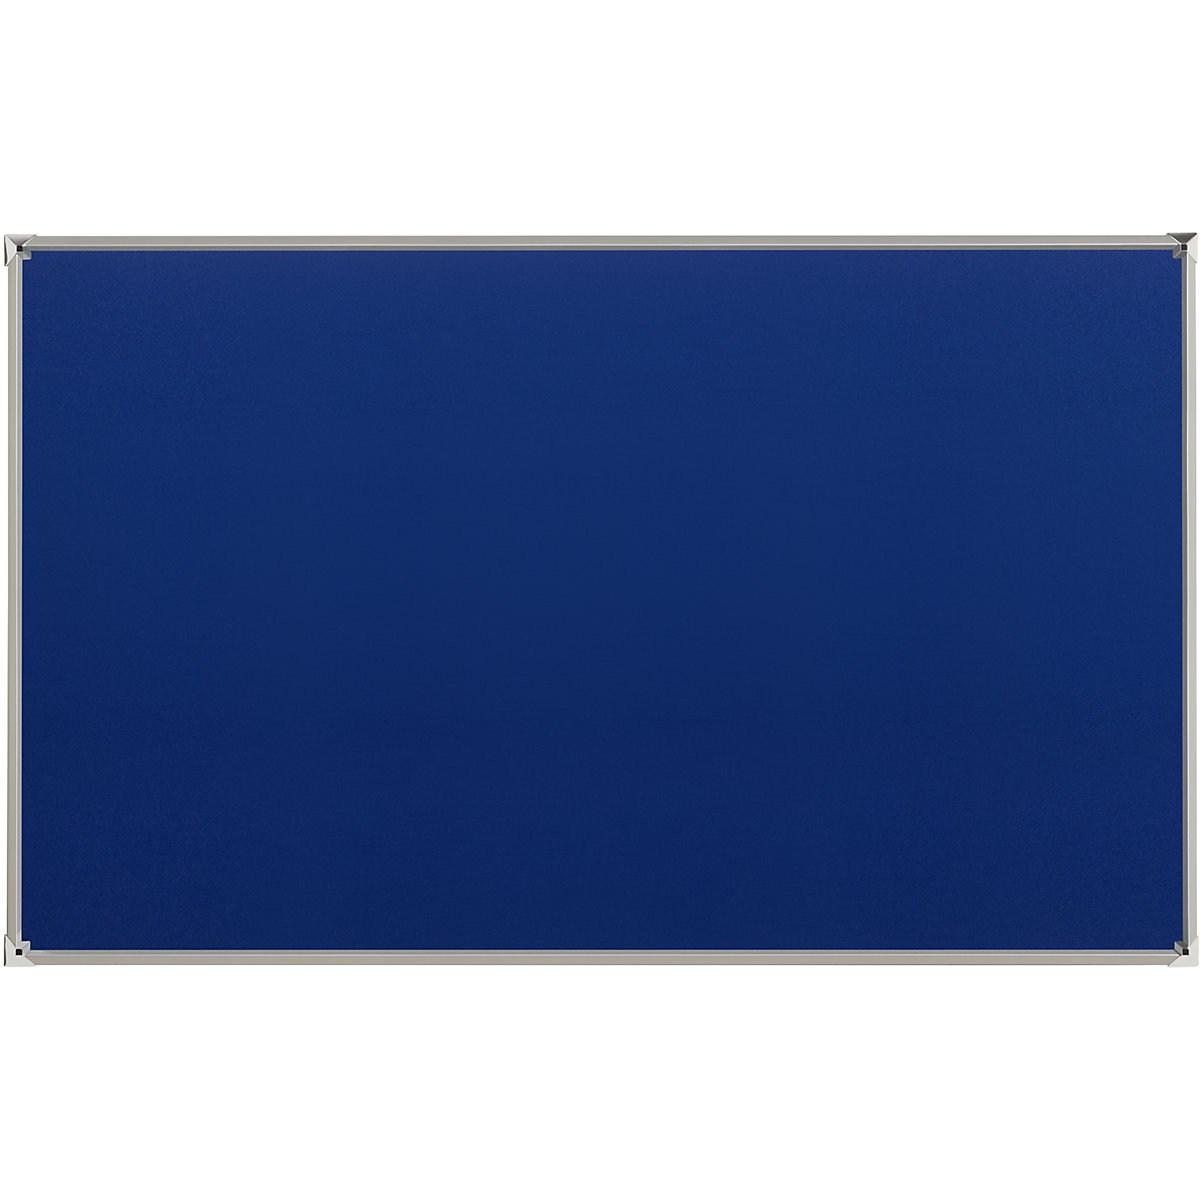 Bacheca con cornice in alluminio – eurokraft pro, tessuto, blu, largh. x alt. 1800 x 1200 mm-4